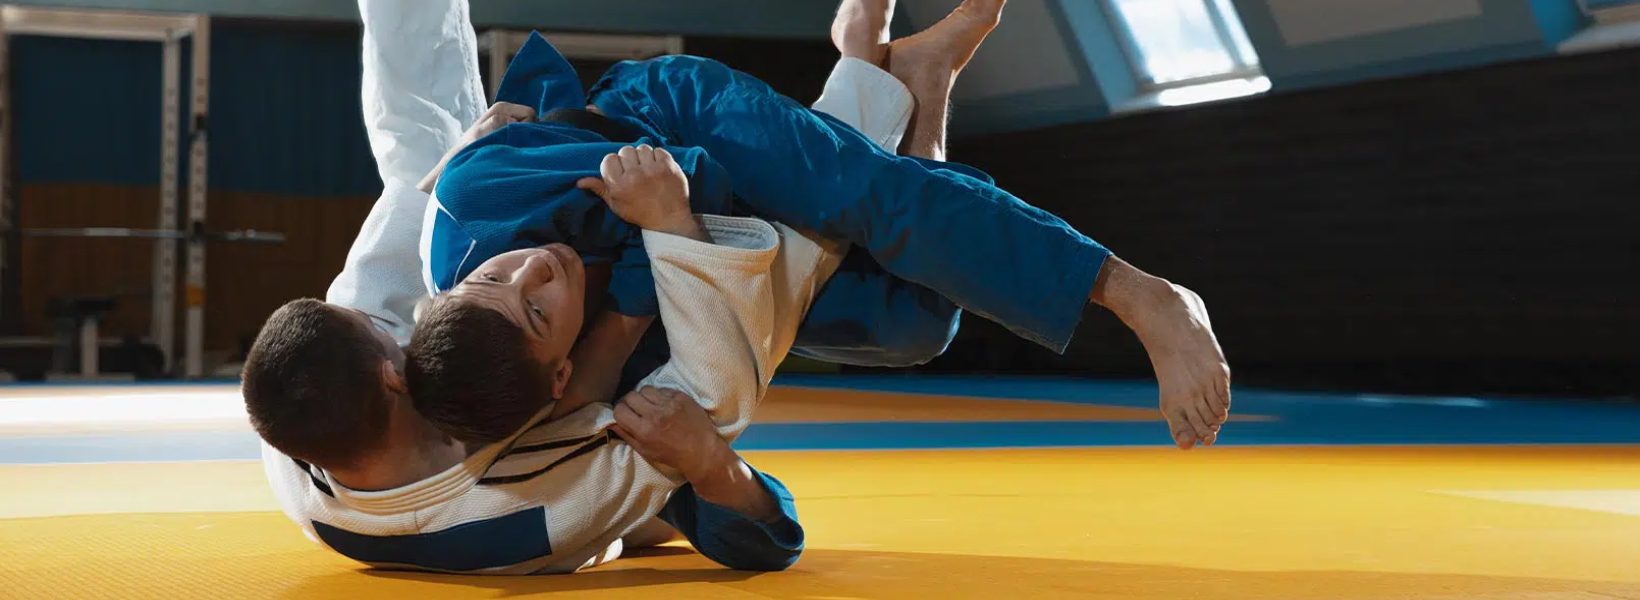 campionat european judo banner logo